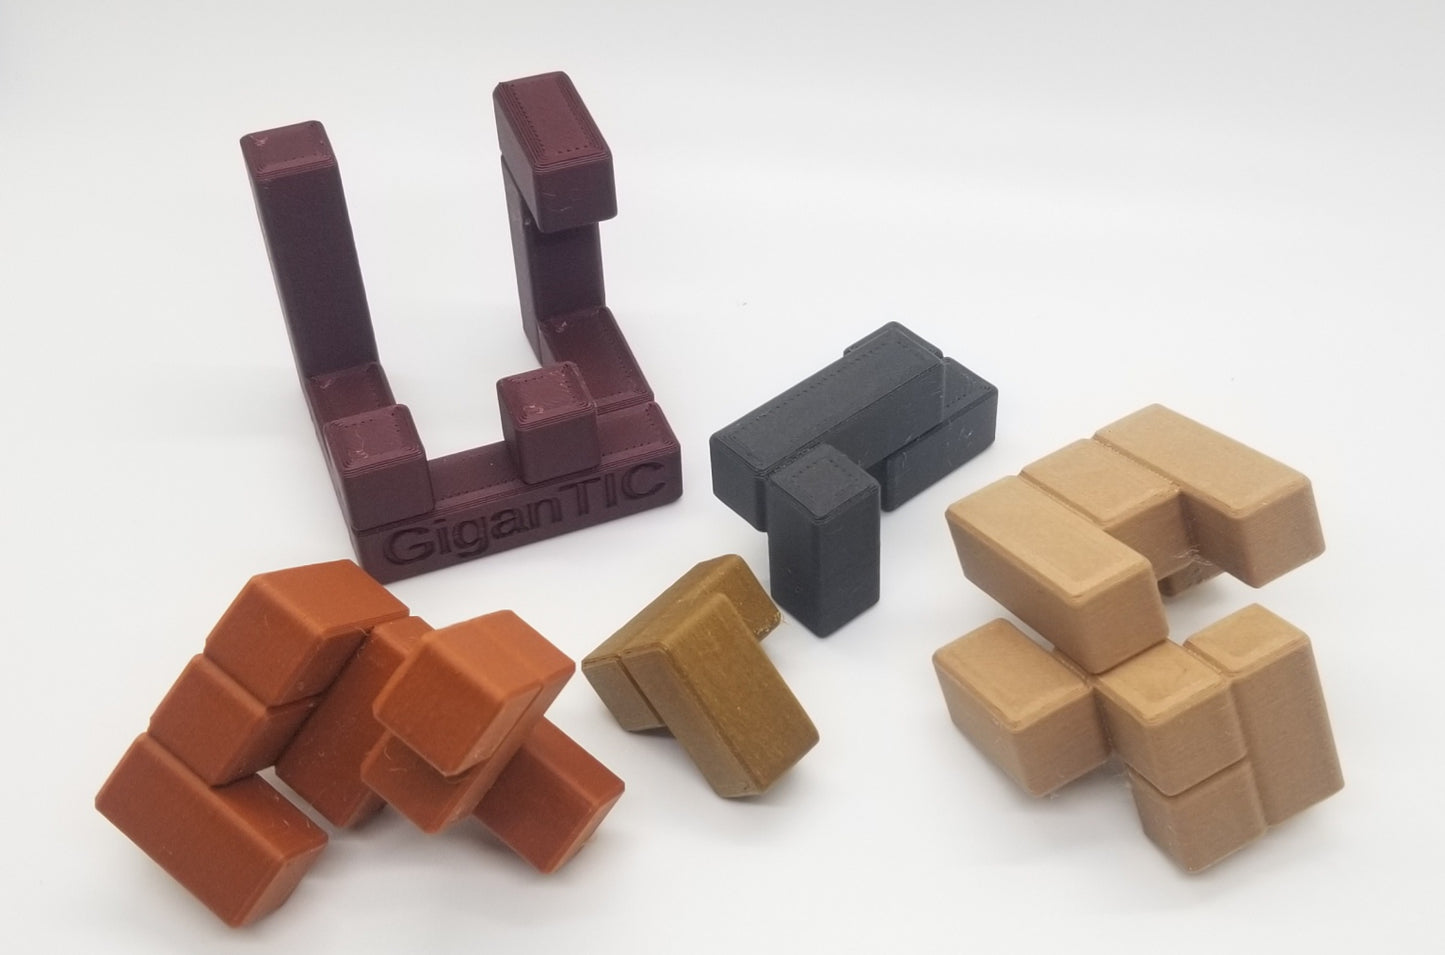 GiganTIC - 3D Printed Wood Filament Puzzle